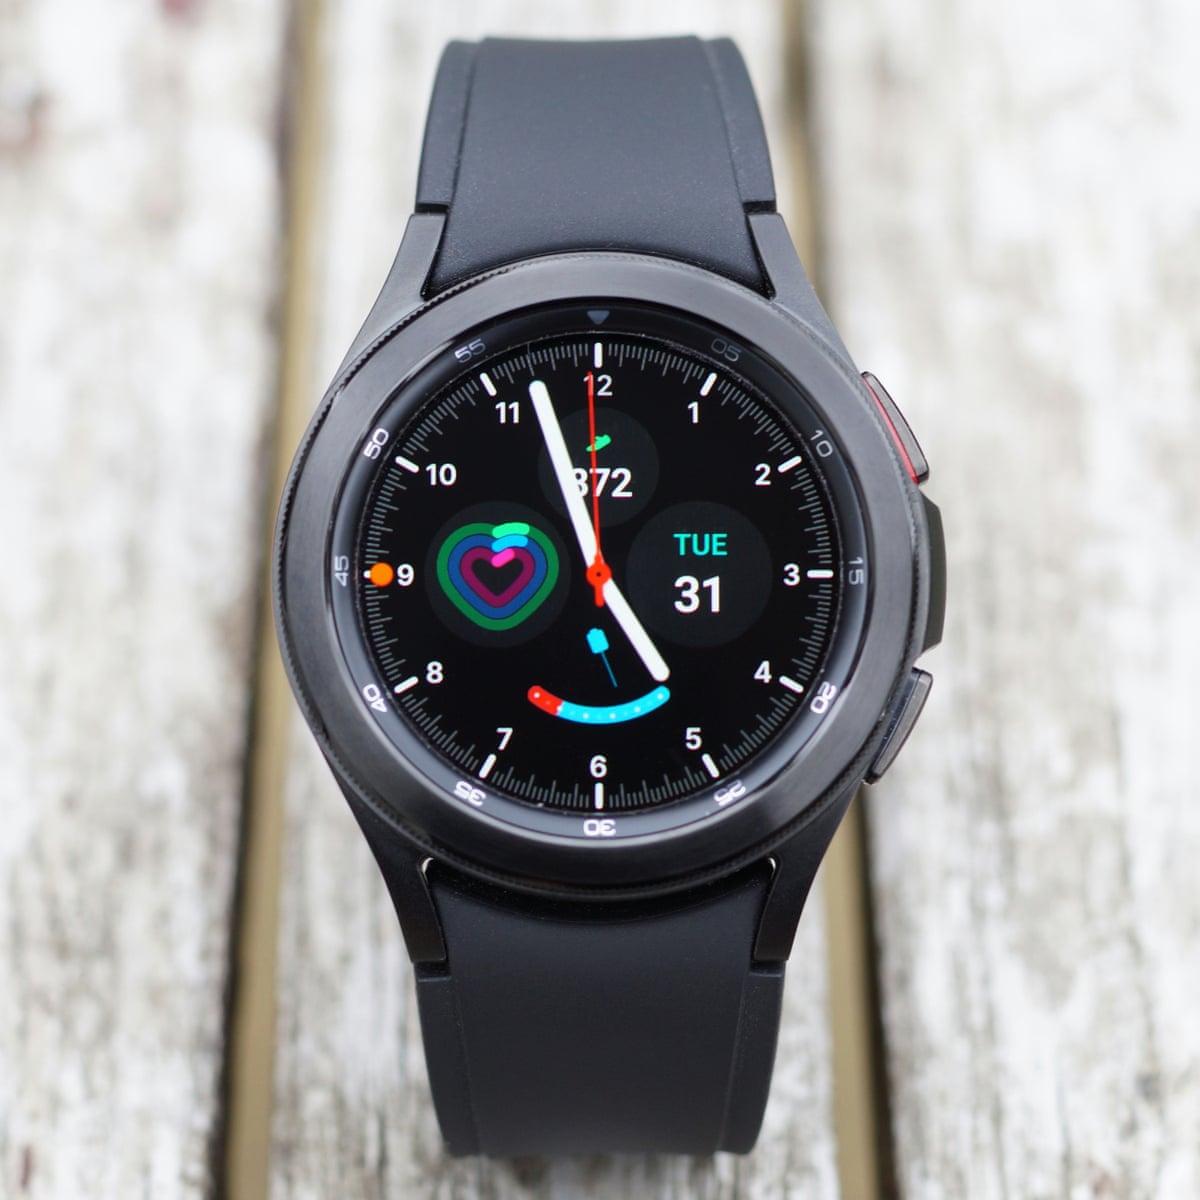 Samsung Galaxy 4 review: Google smartwatch raises bar | Samsung | The Guardian